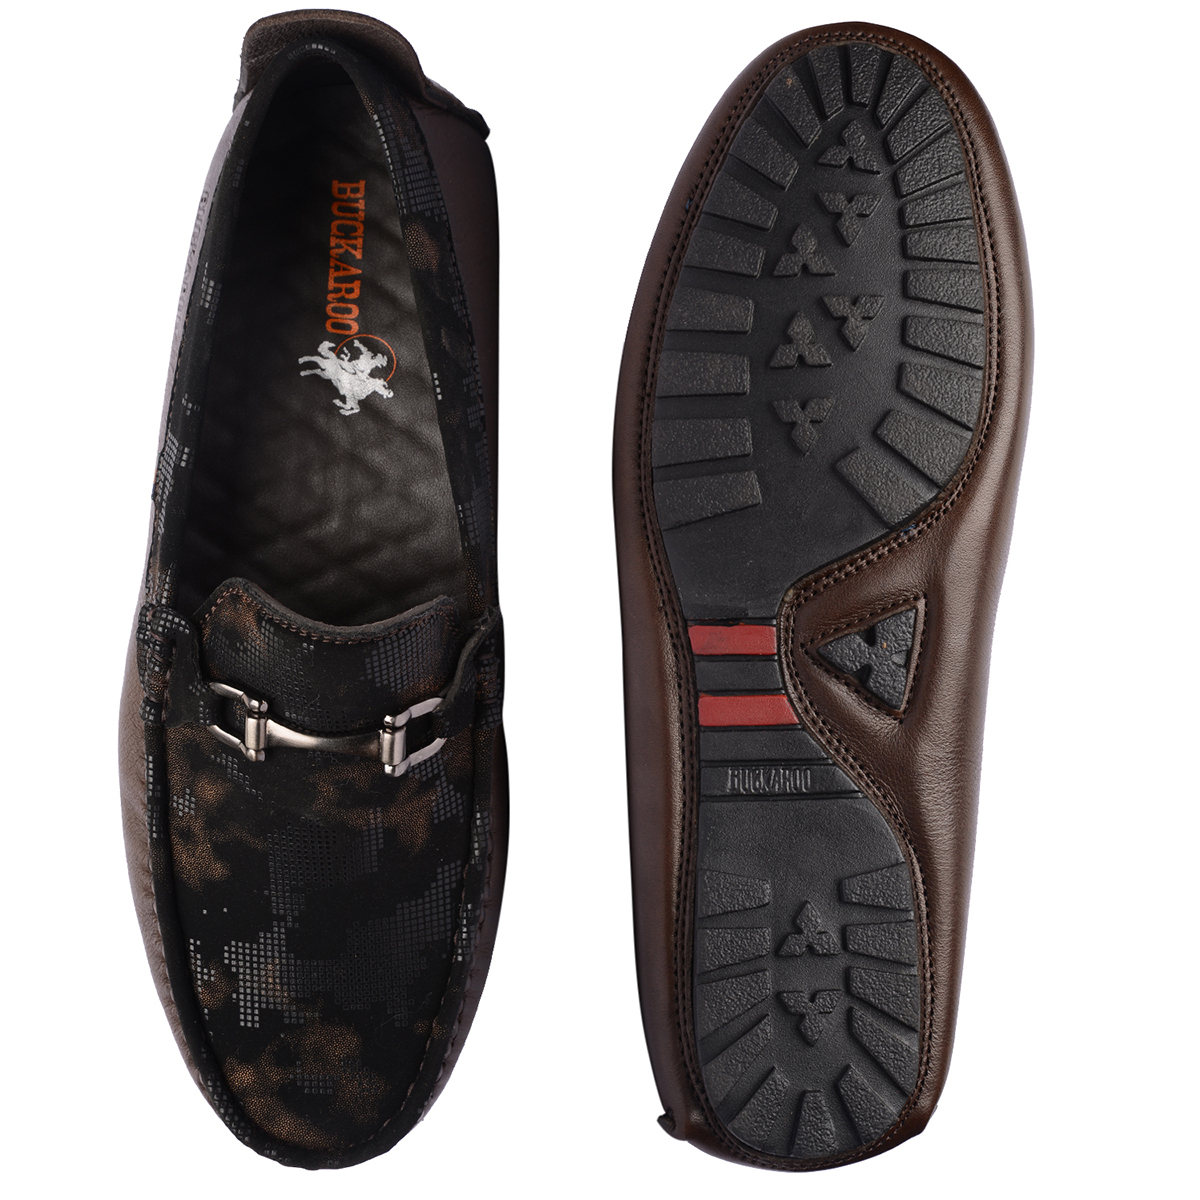 Buckaroo Mens Casual Shoes